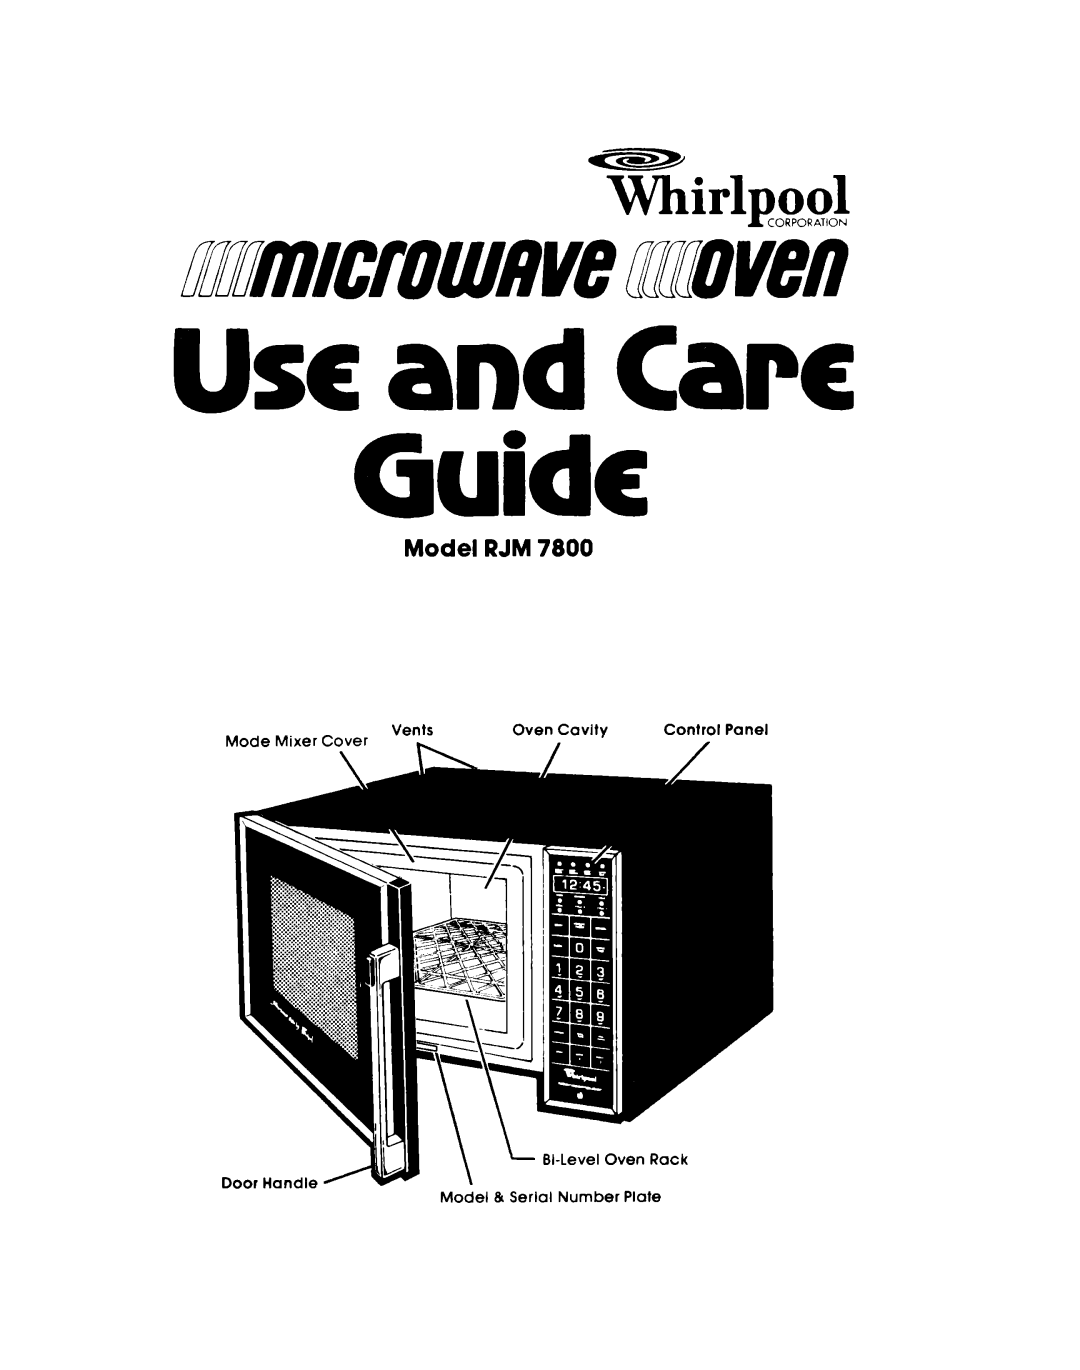 Whirlpool RJM 7800 manual Model RJM, Guide, Use and Care, ~irlpool 